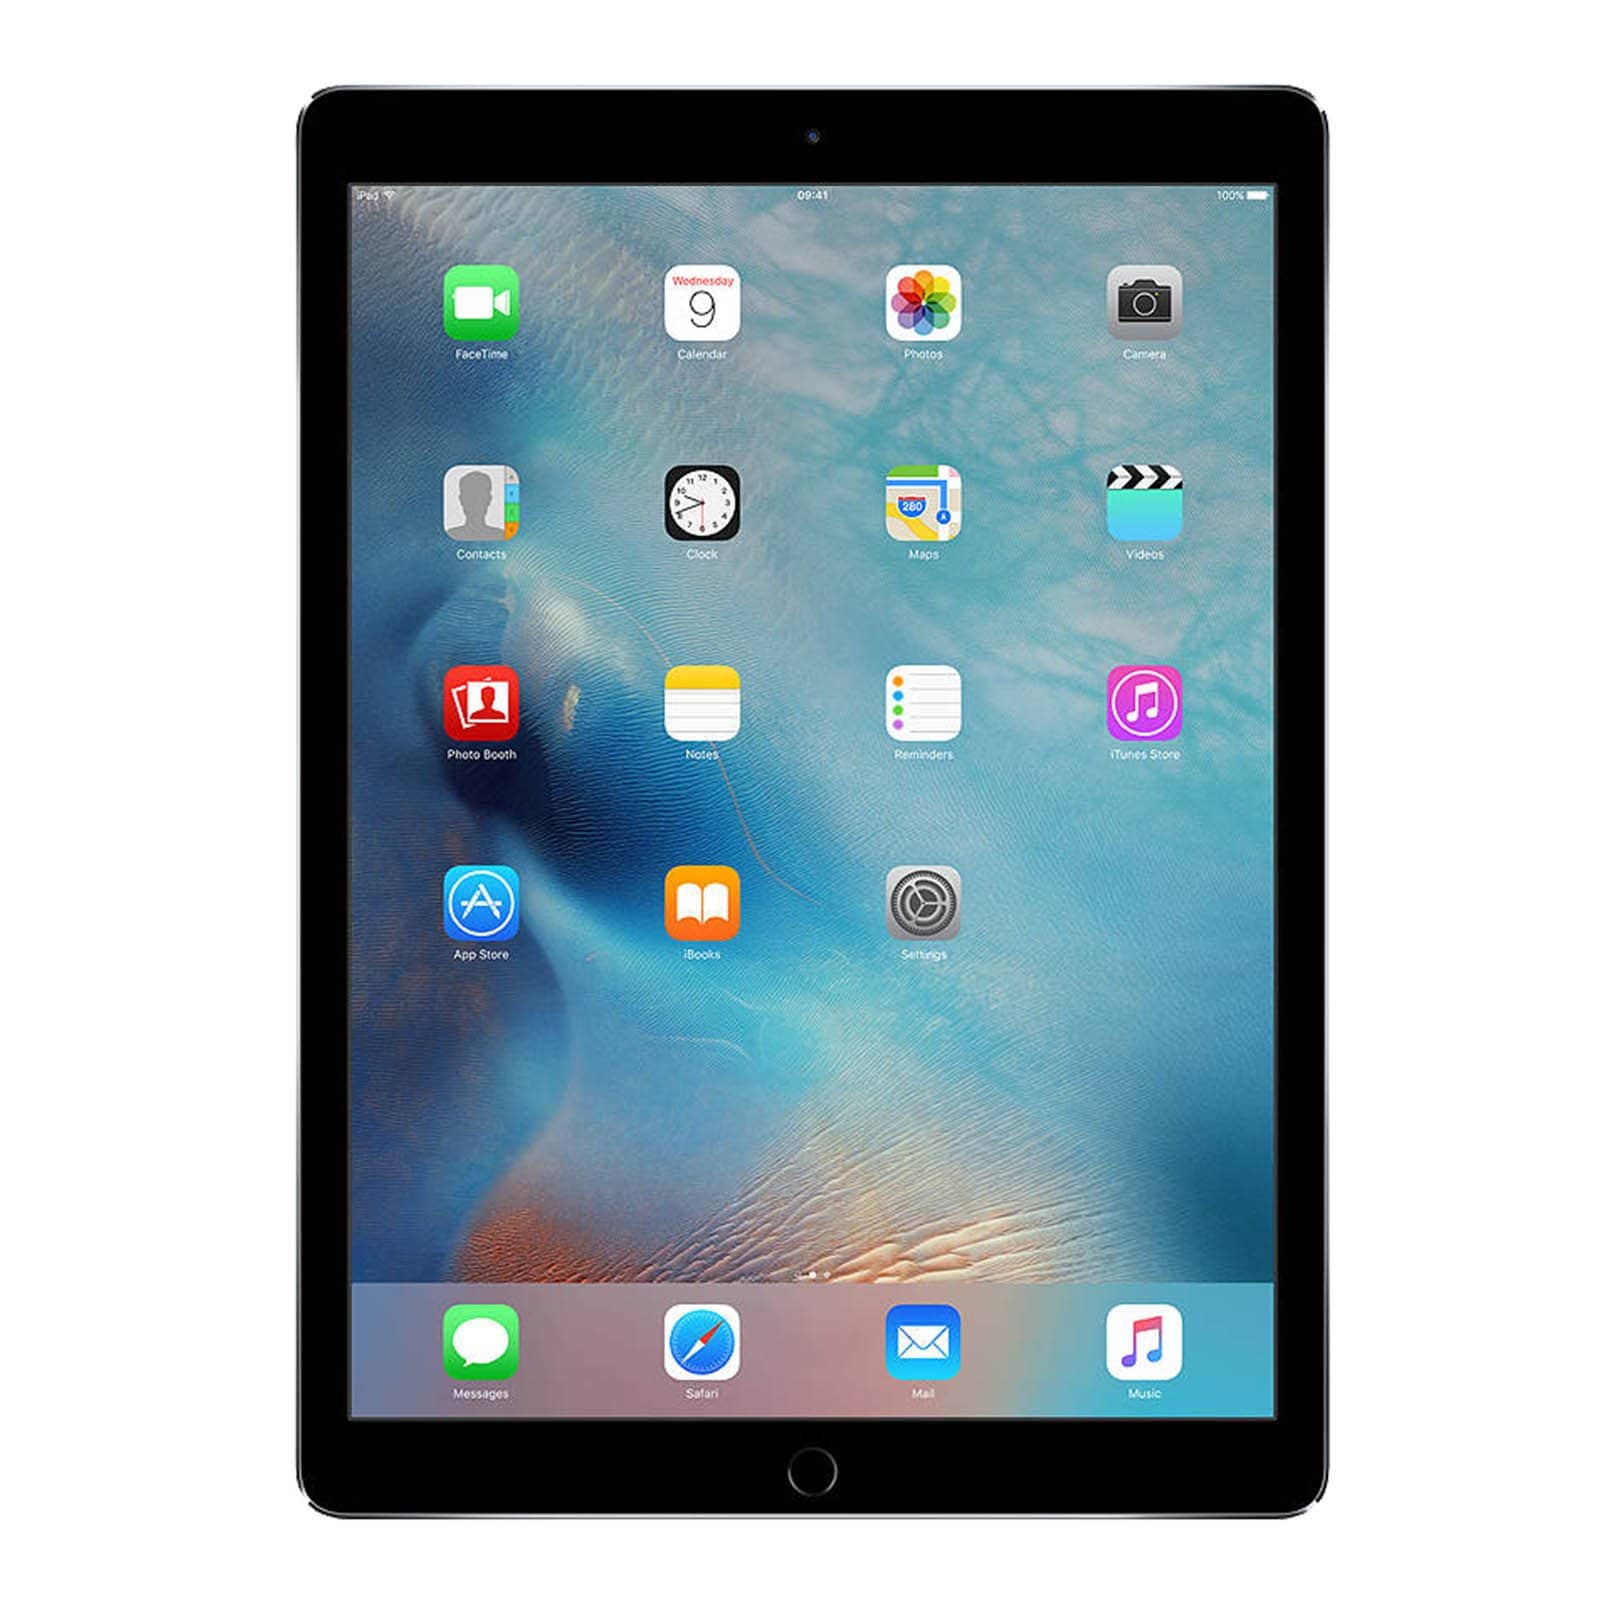 iPad Pro 12.9 Inch 2nd Gen 256GB Space Grey Very Good - WiFi